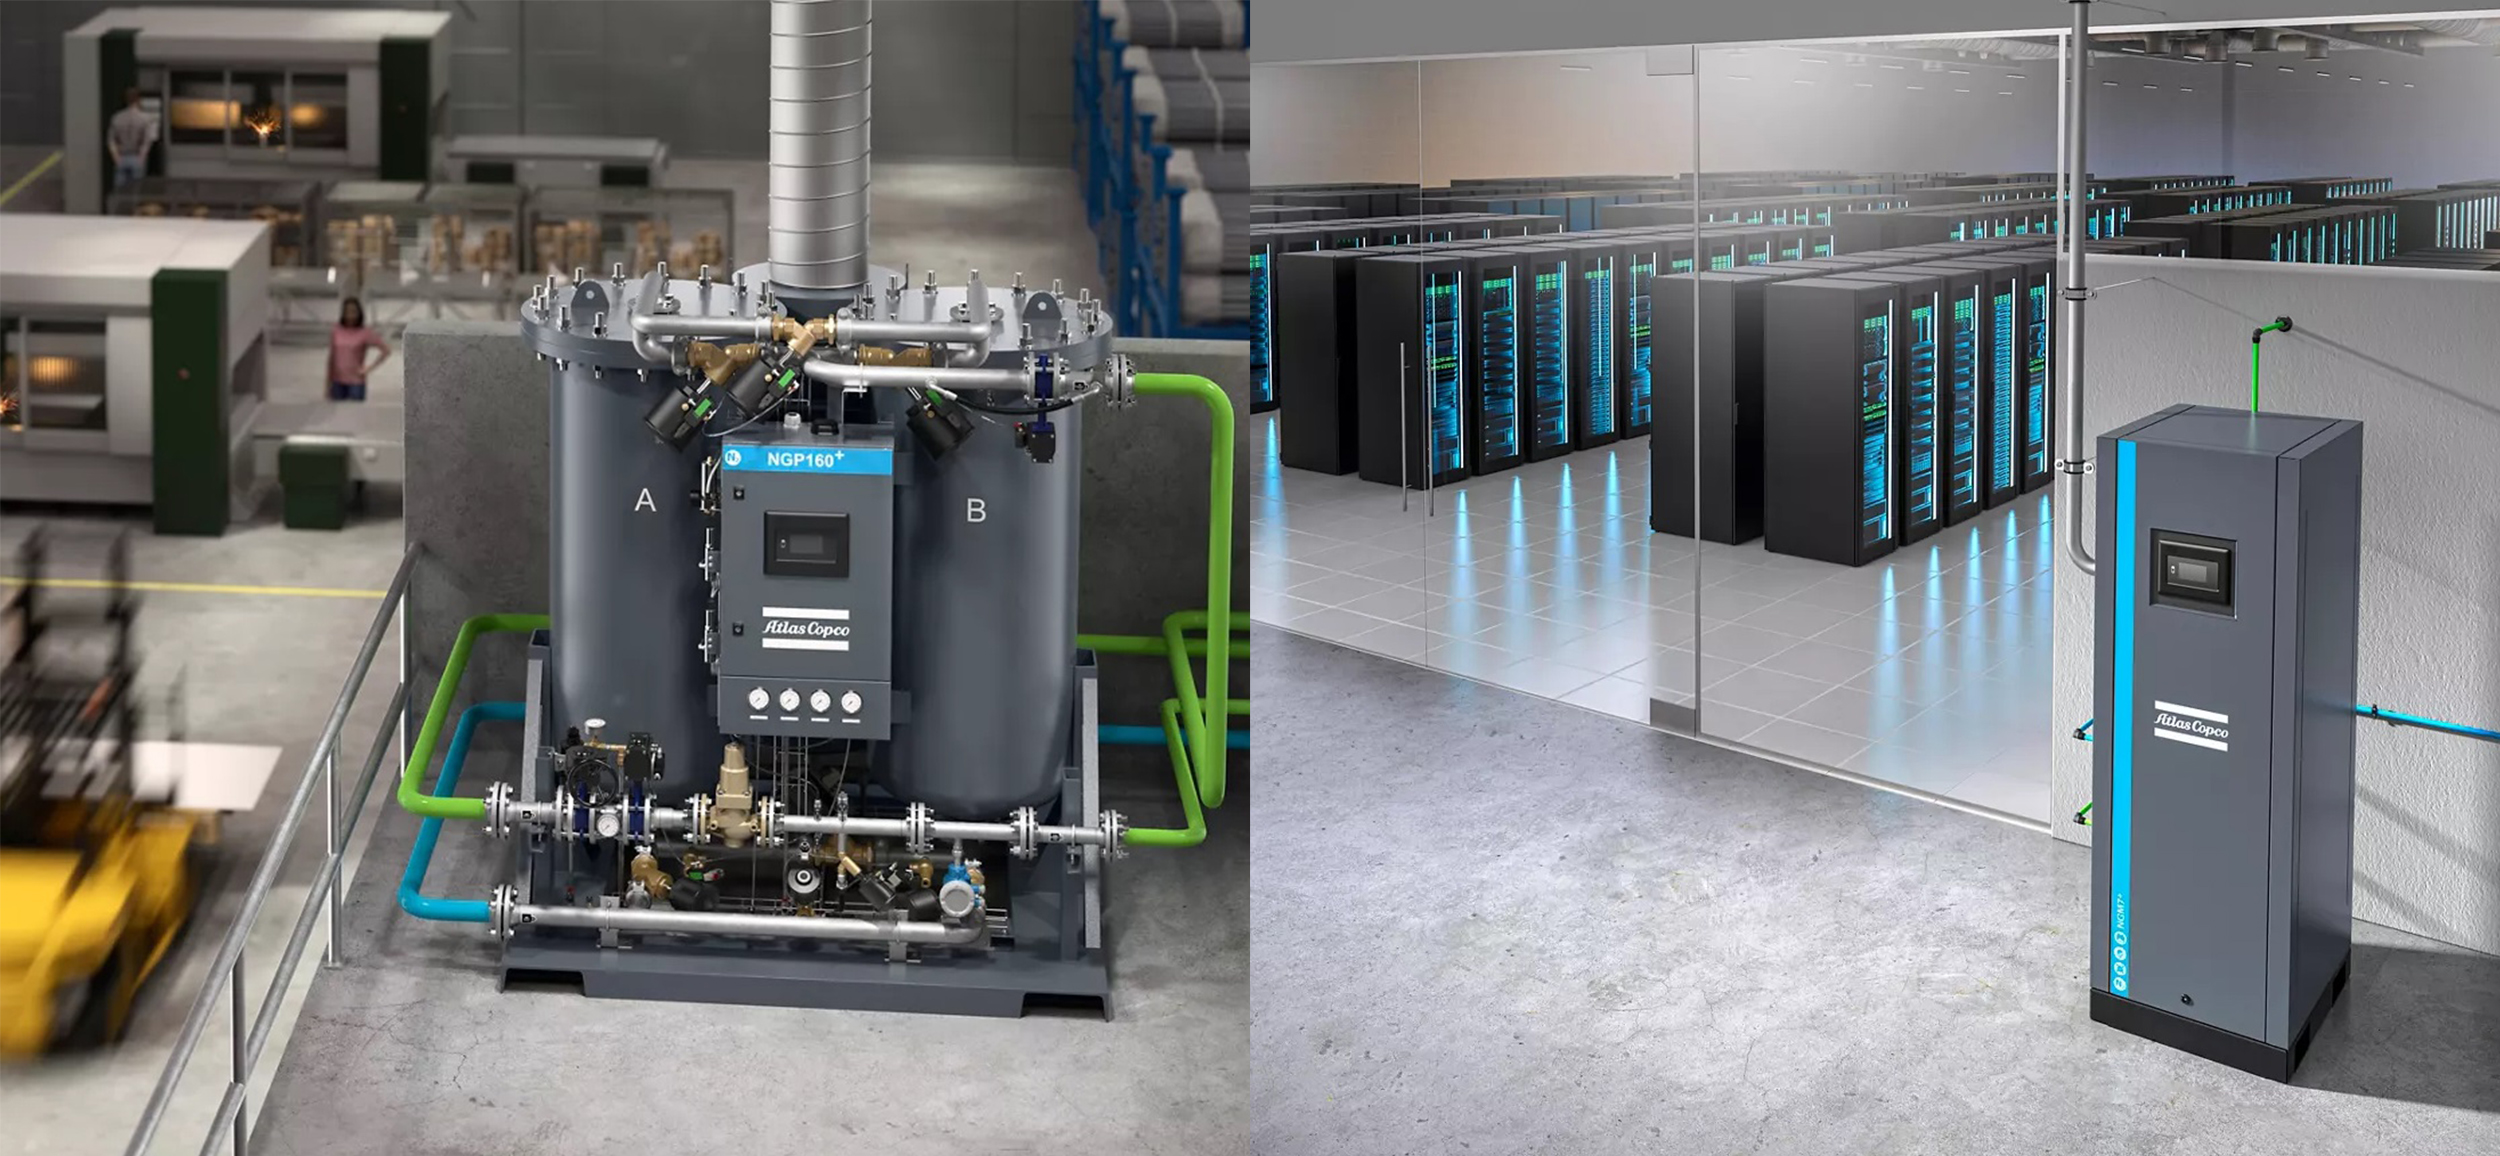 Atlas Copco has launched its new range of advanced onsite nitrogen generators